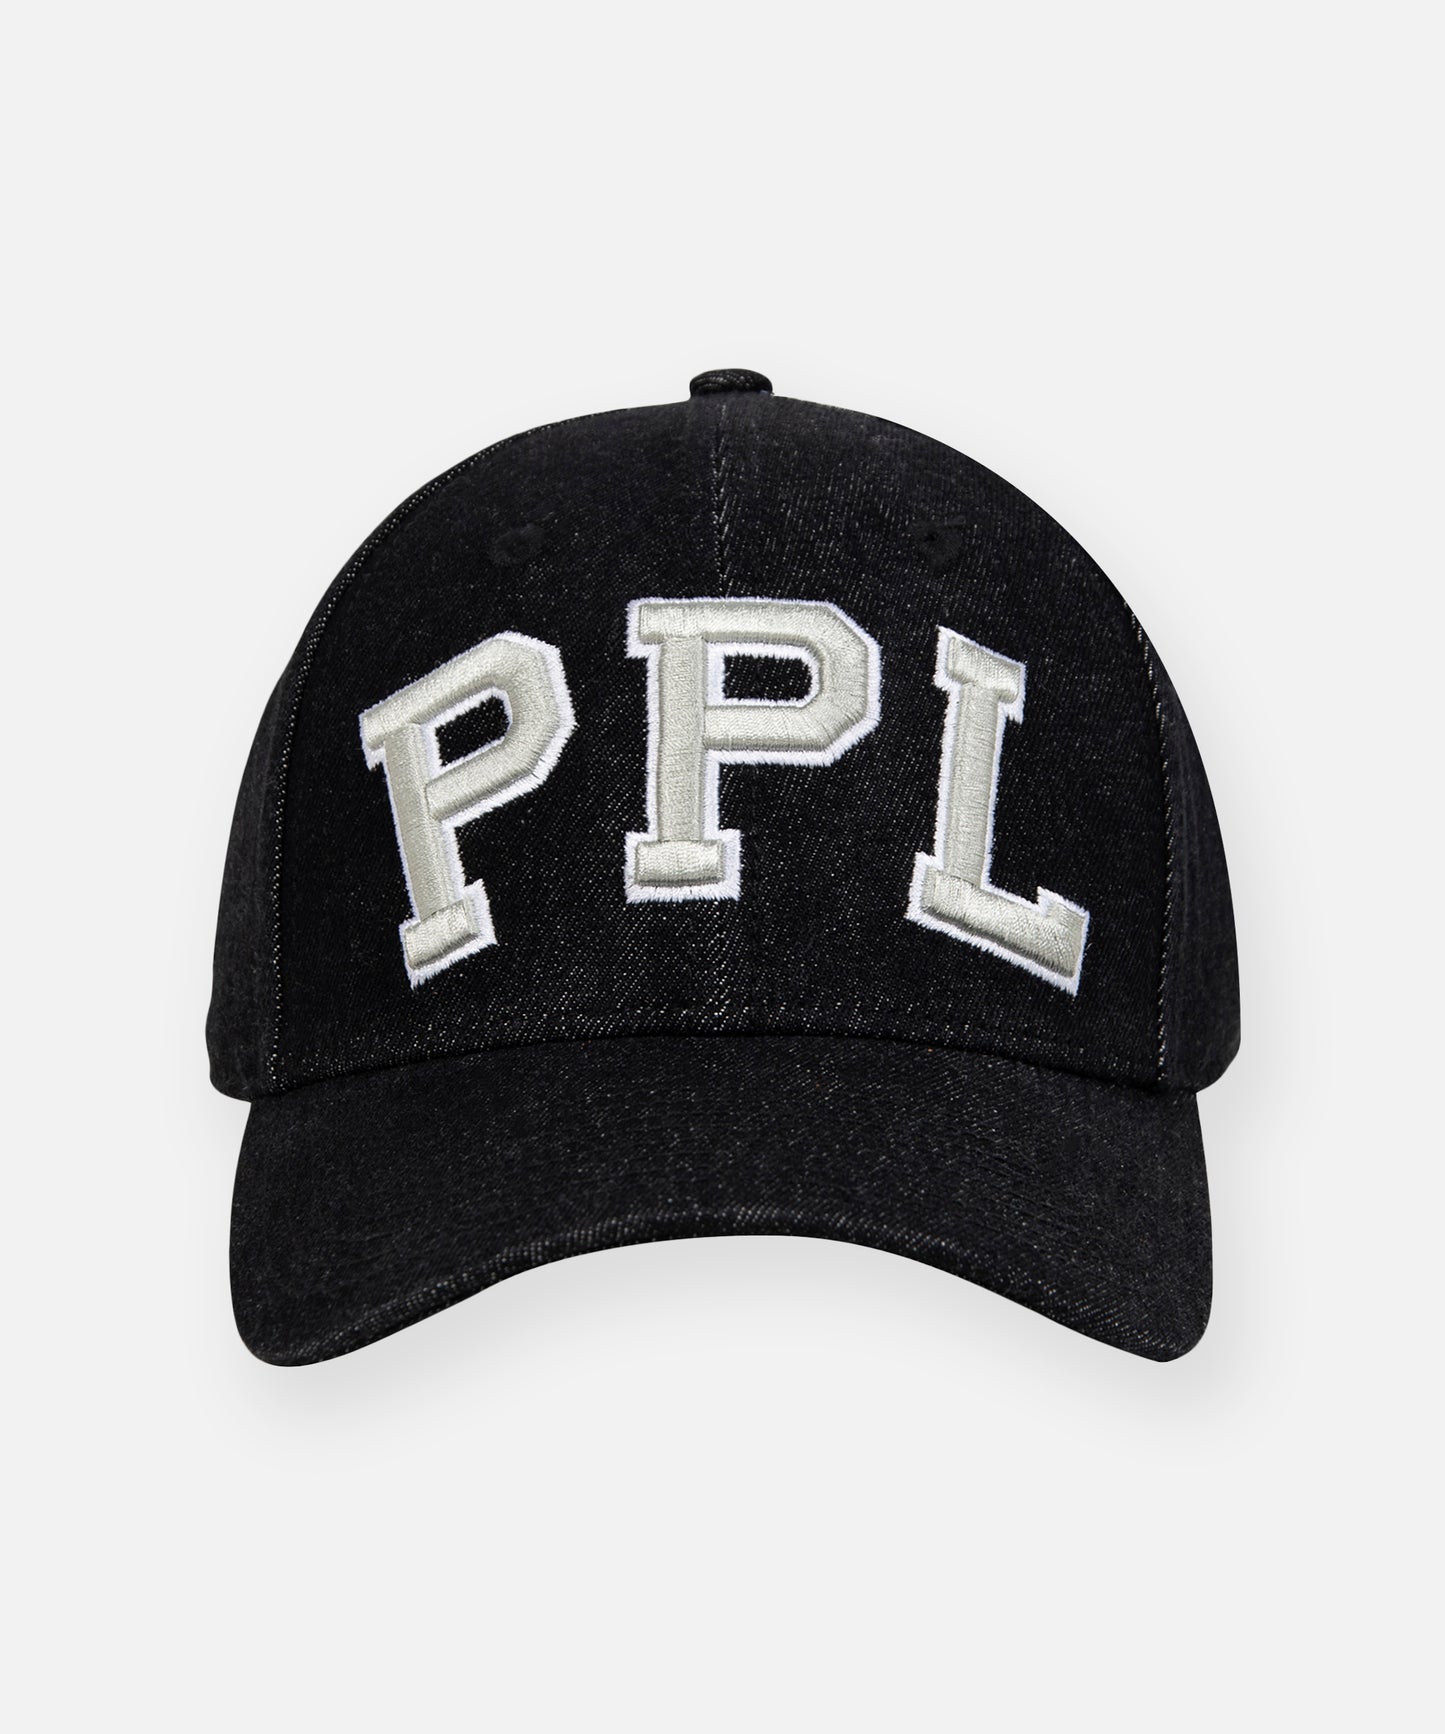 PPL Dad Hat